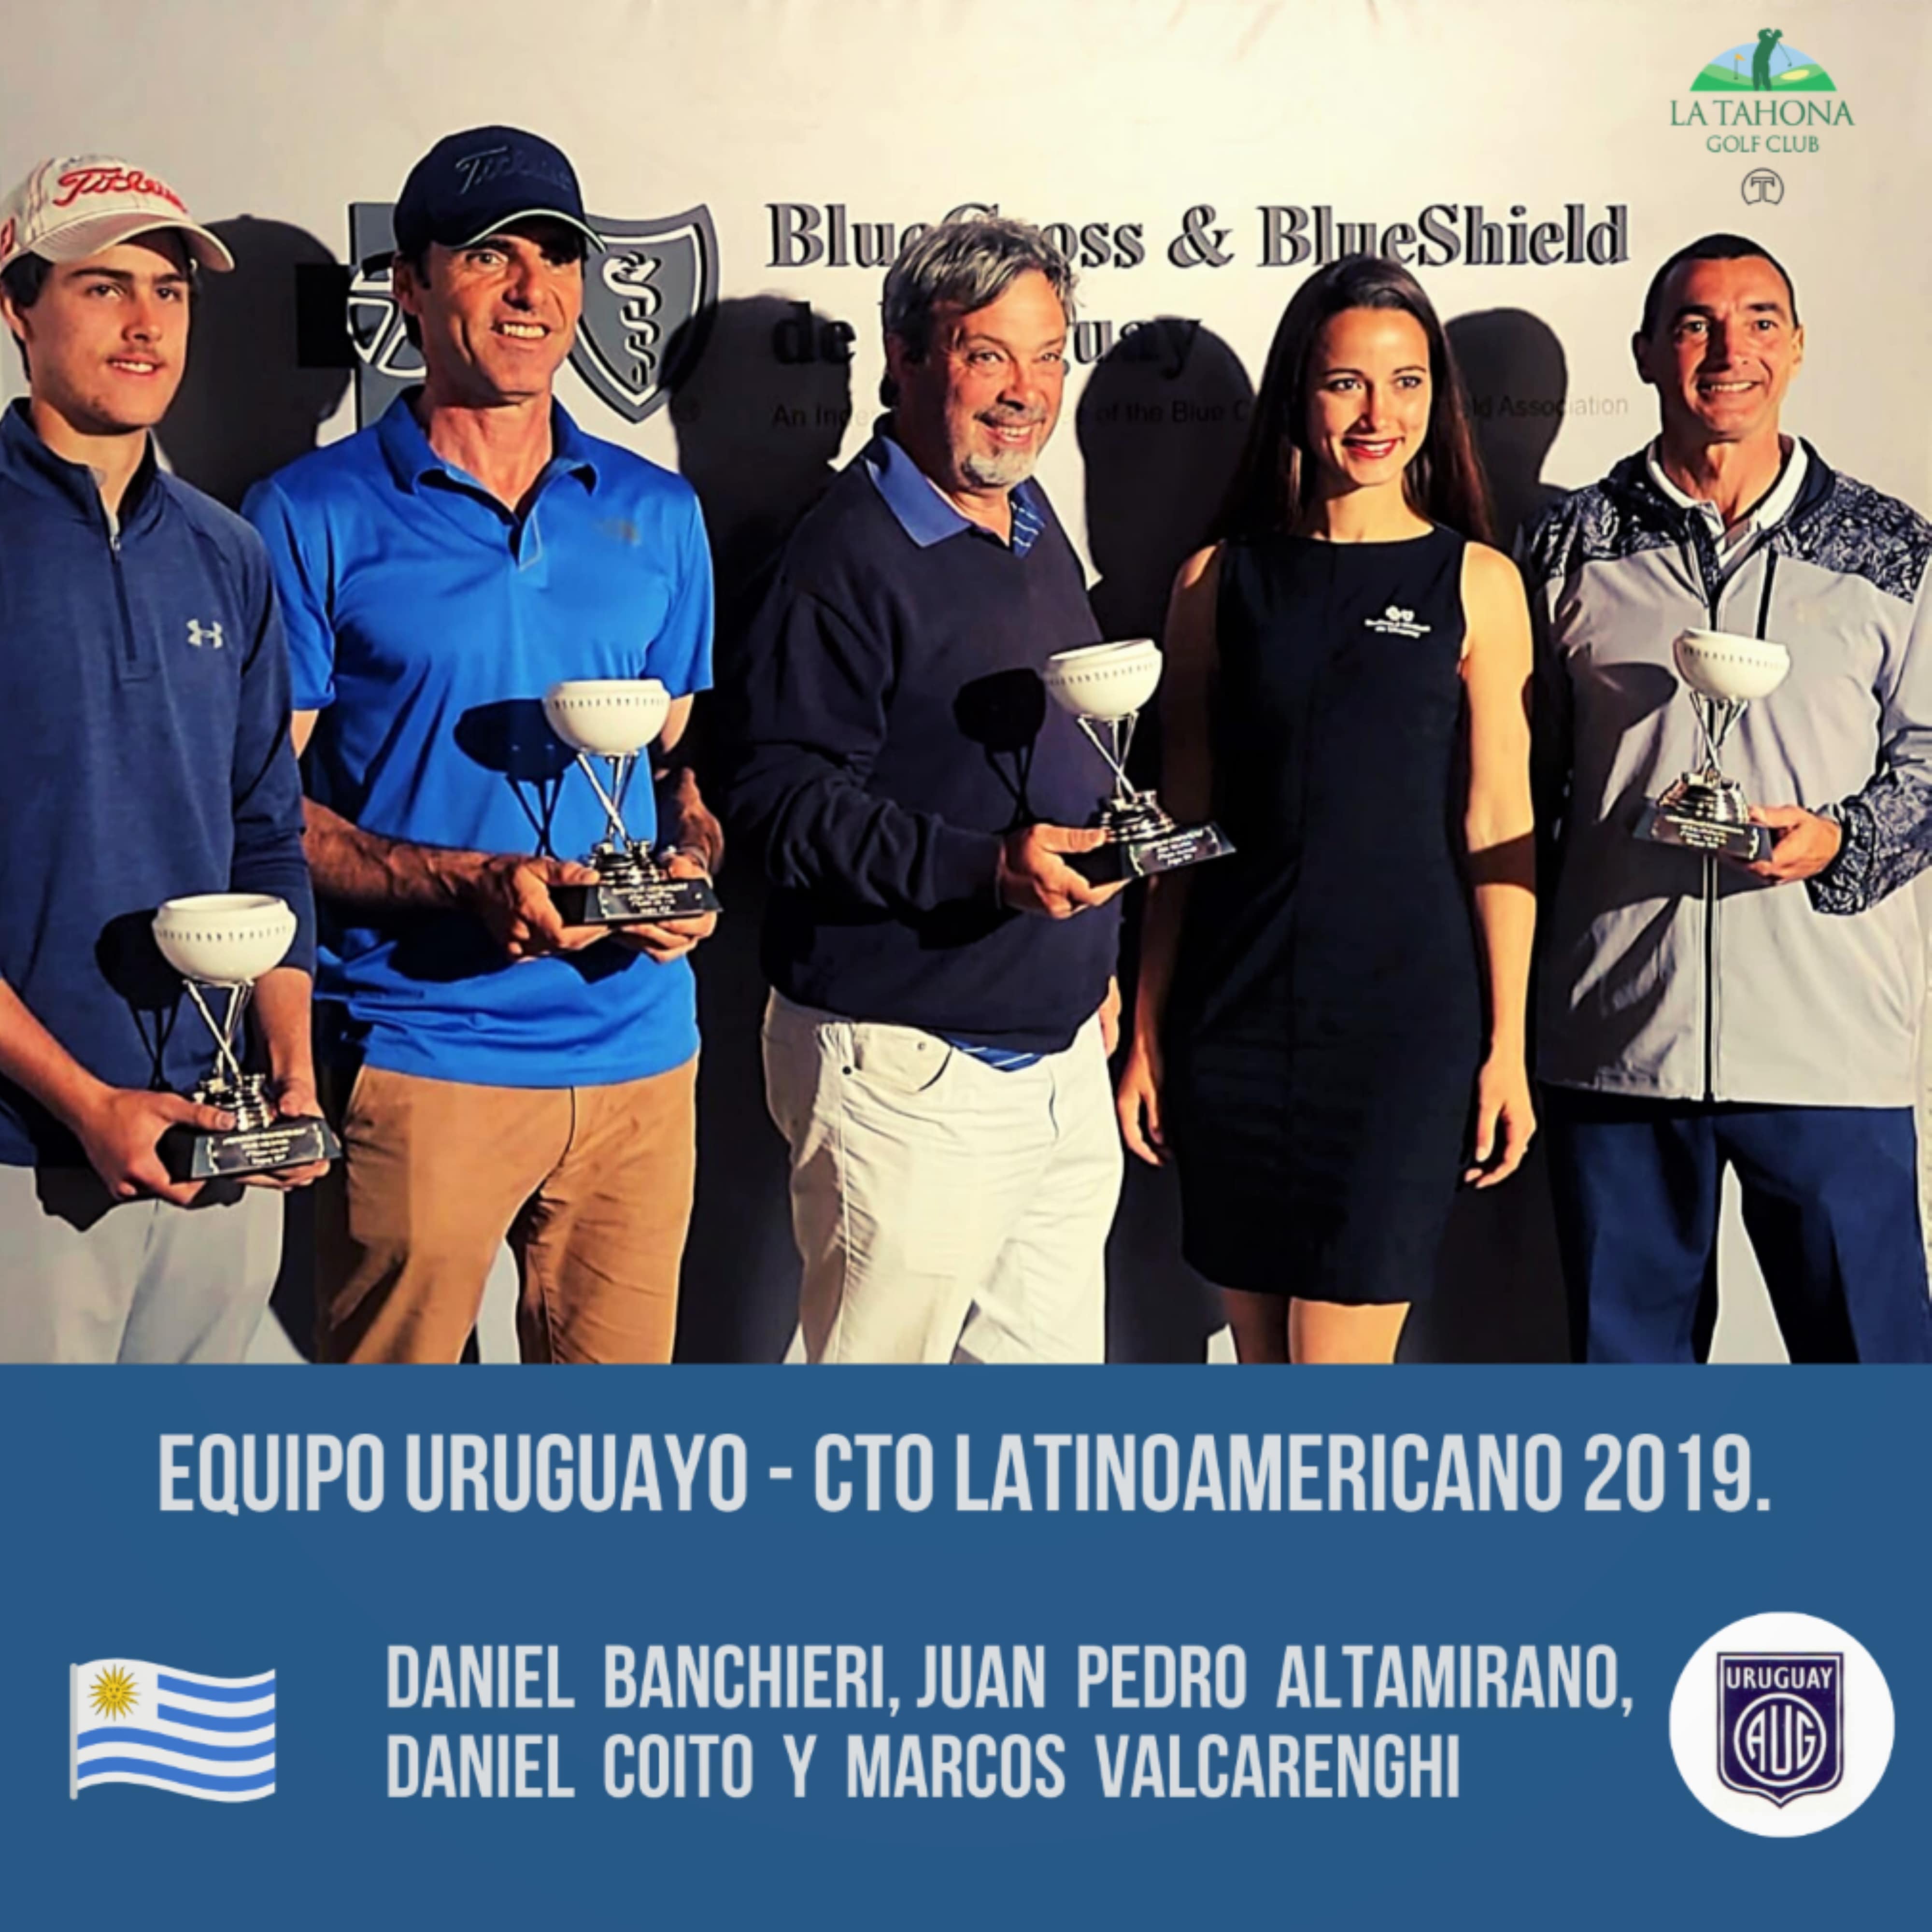 Equipo Uruguayo 2019 - Cto. Latinoamericano